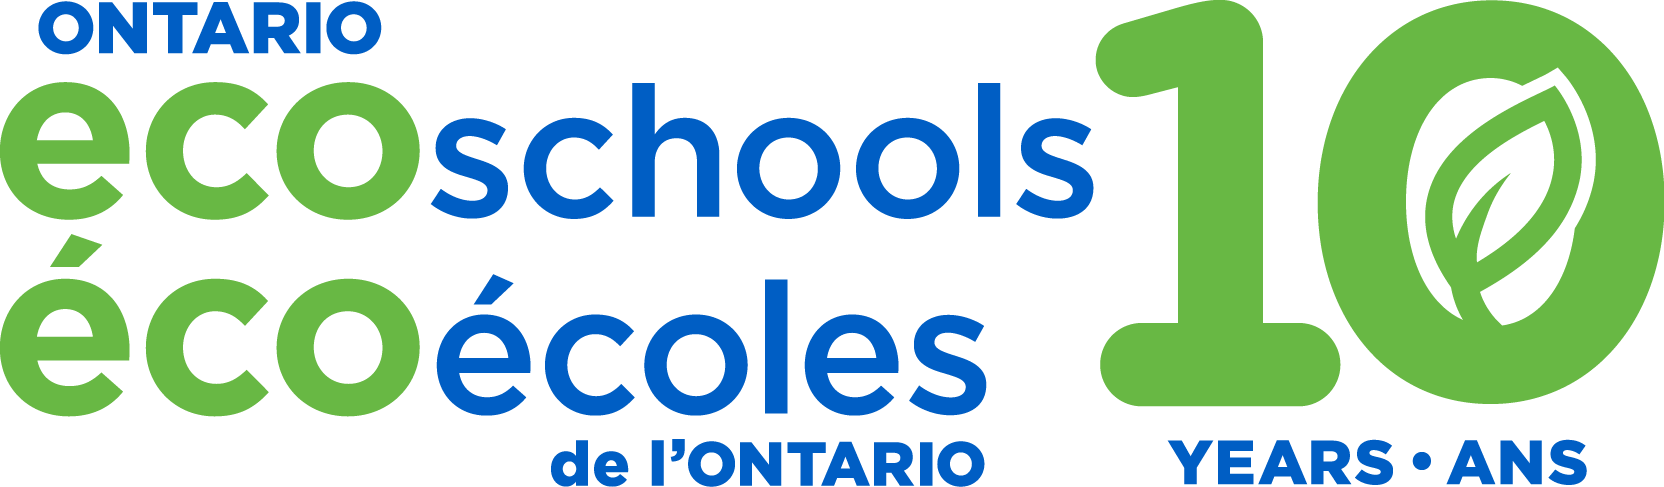 Toronto Catholic District School Board,learn For Life - Ontario Eco Schools (1664x487)